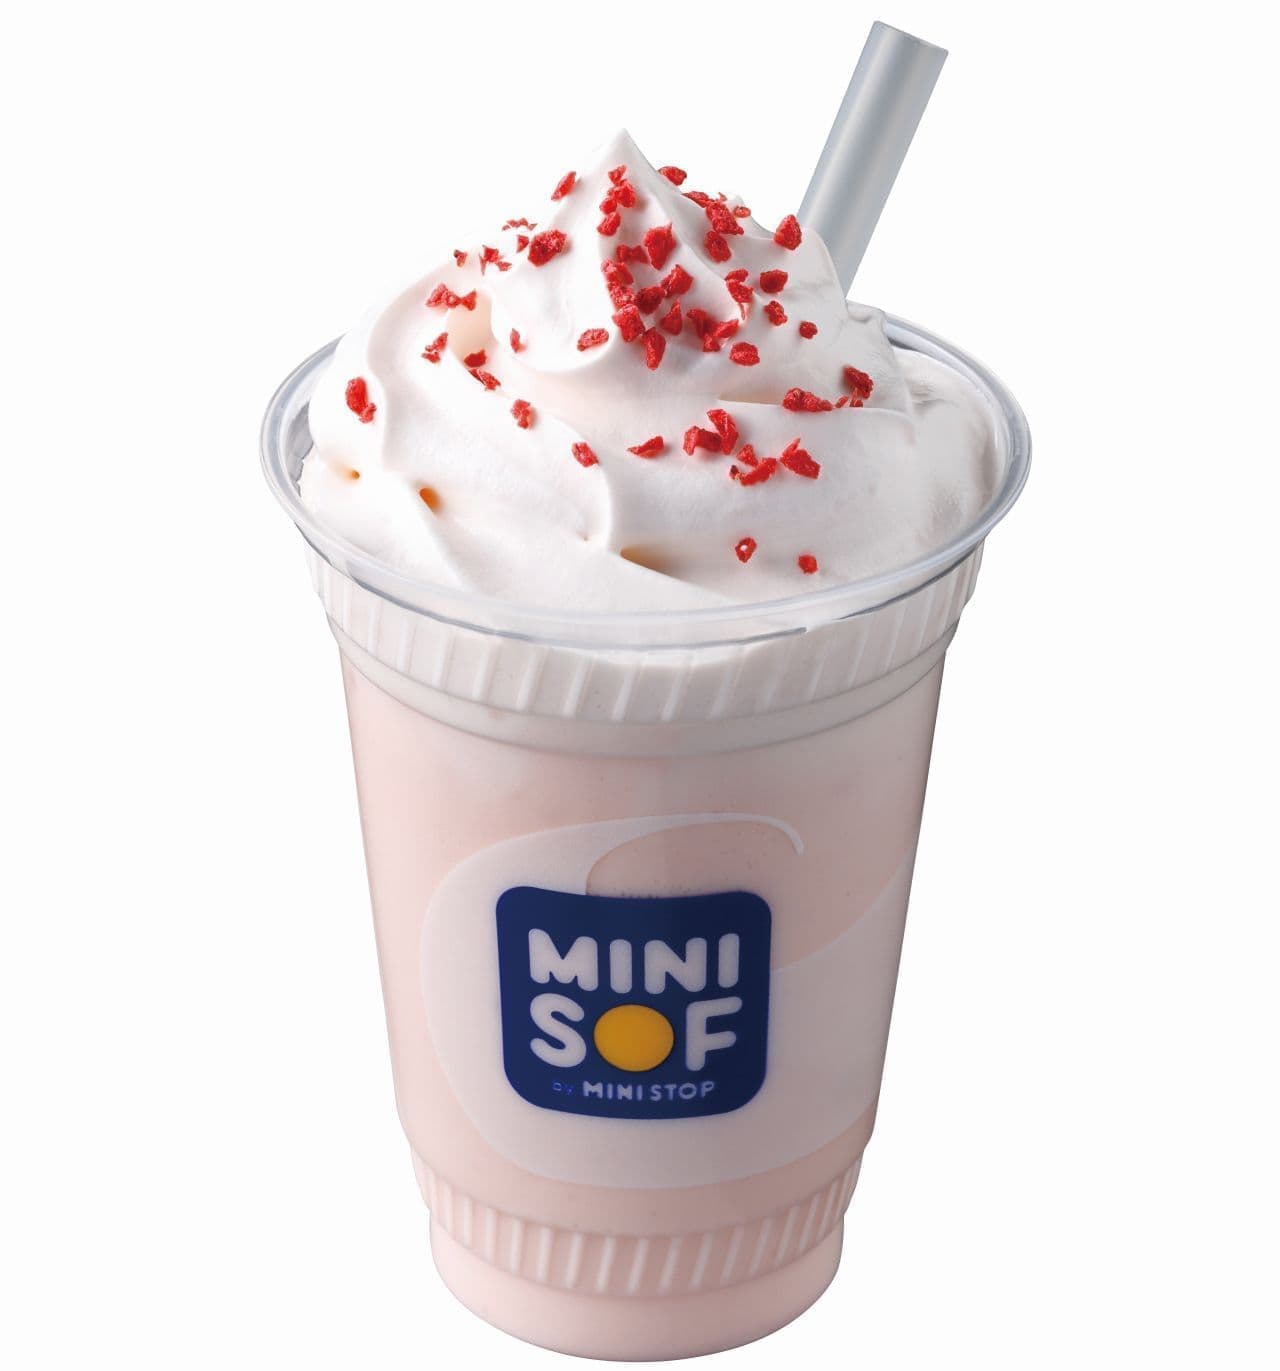 Minisof "Nomu Soft Cream Strawberry Sakura Milk